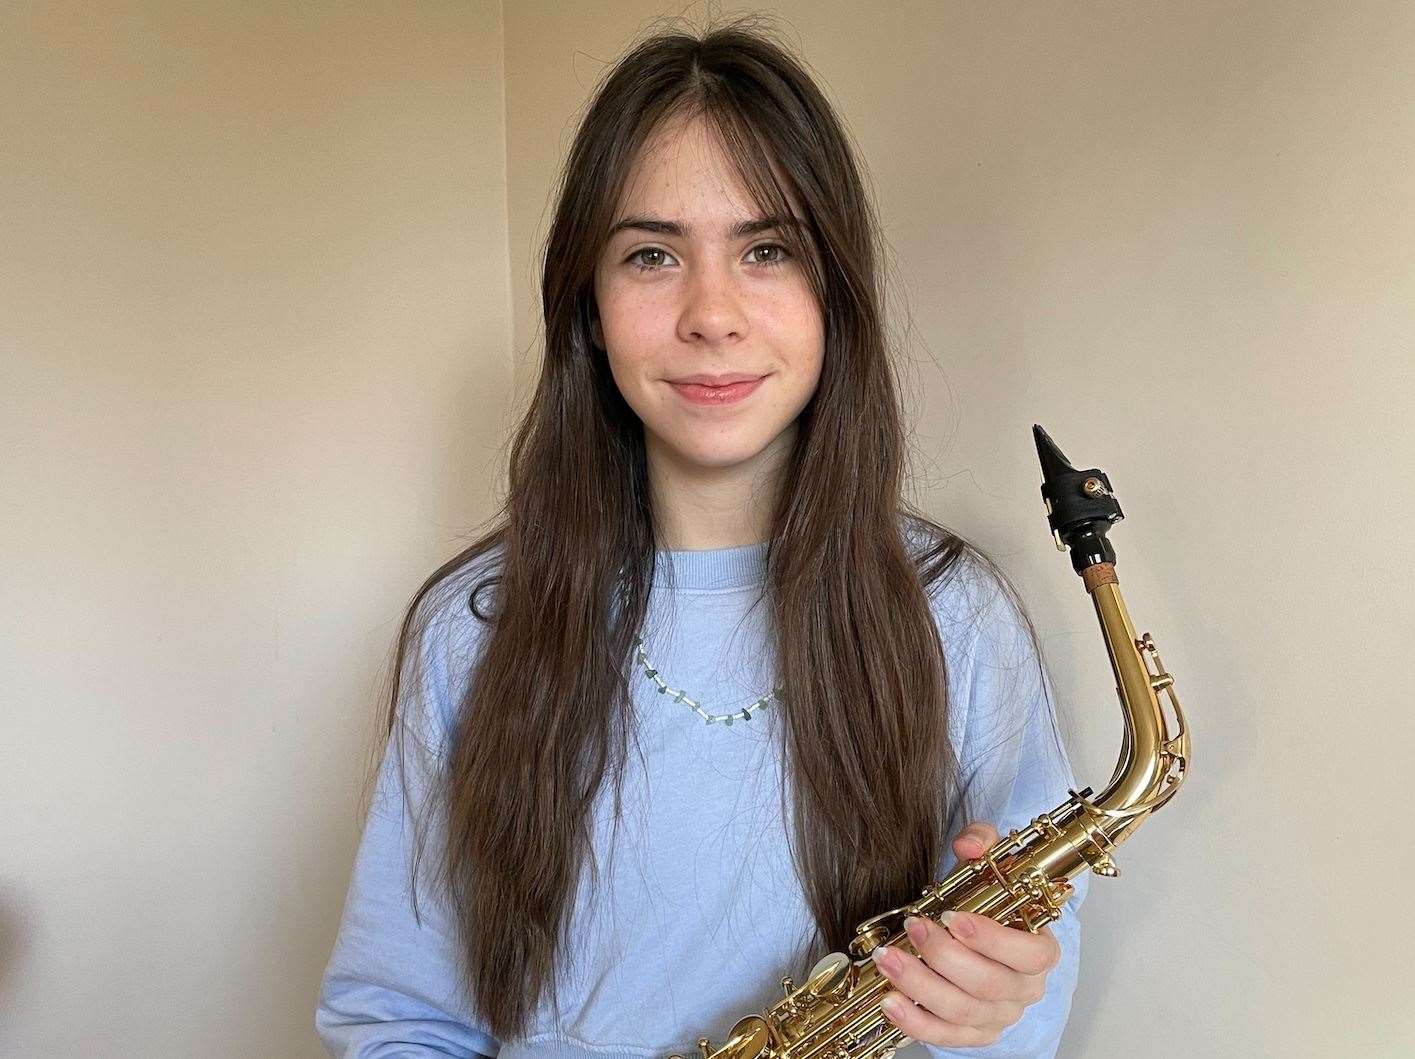 Saxophonist Jessica Powell, 14